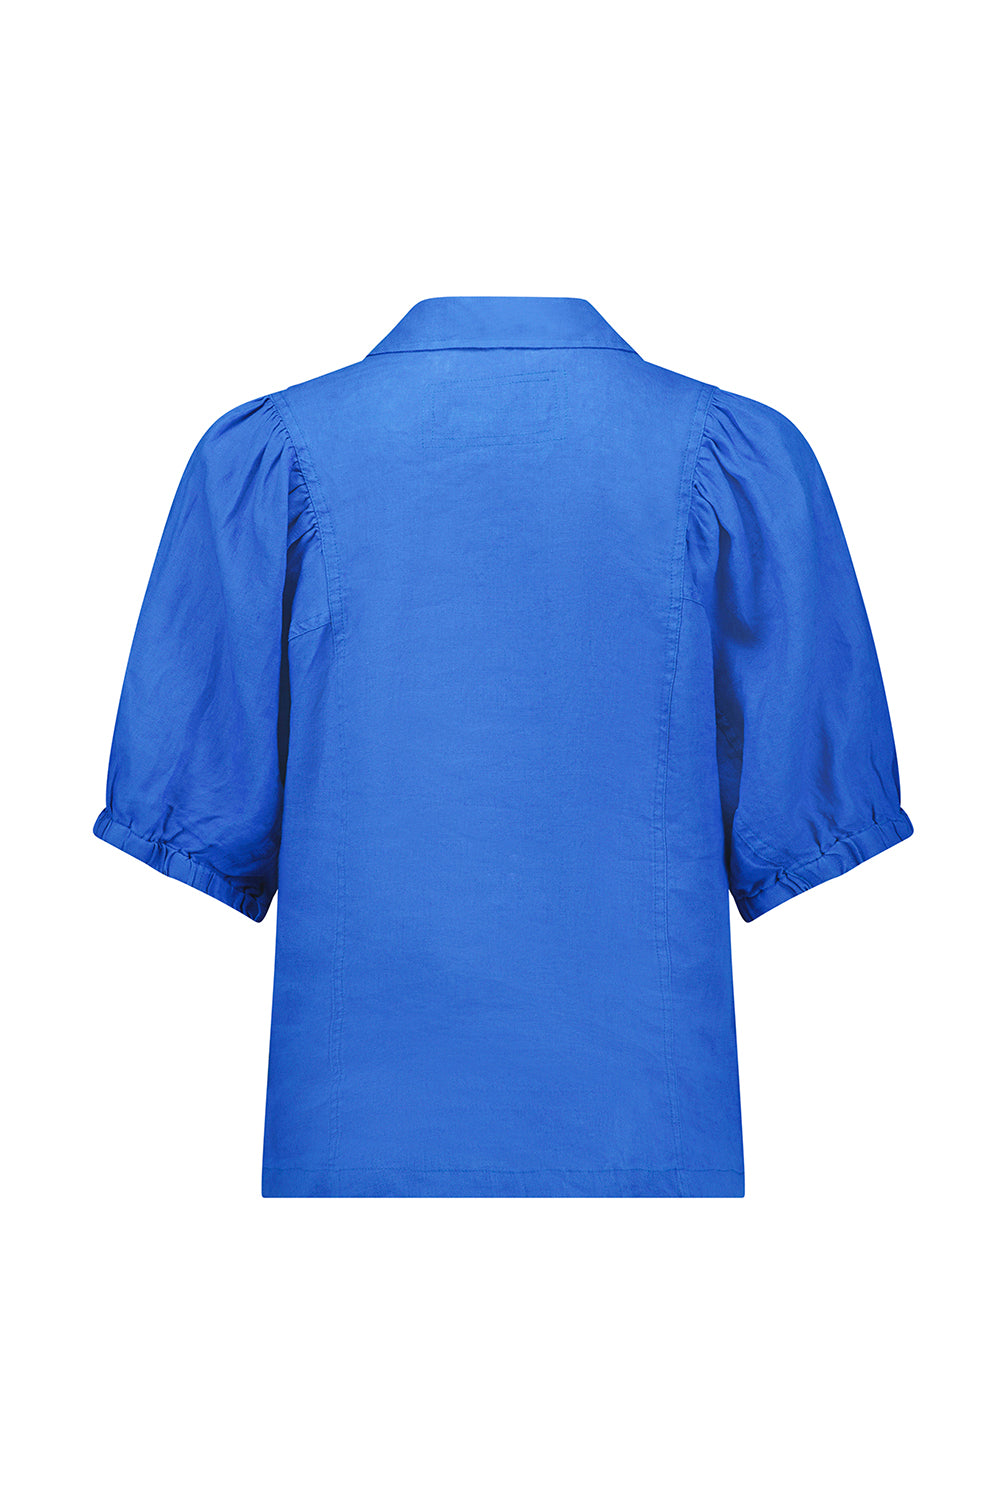 Adorn Shirt - Cobalt - Shirt VERGE